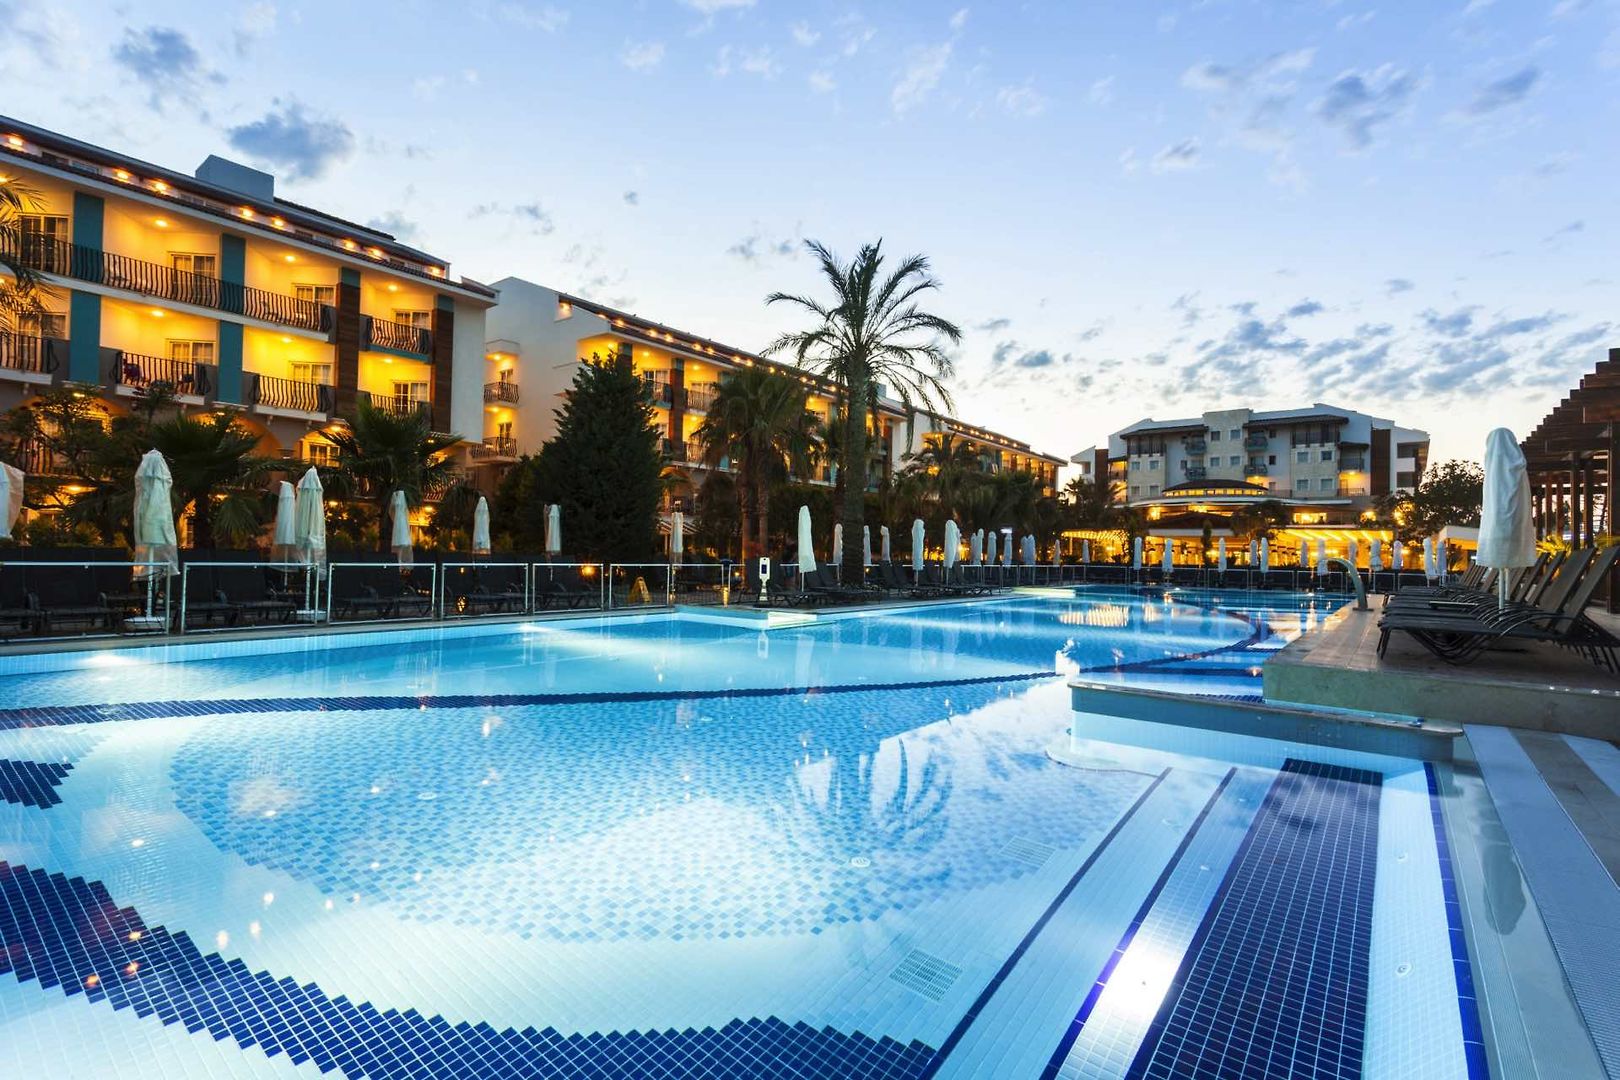 Wyndham Garden enters Turkey with stylish hotel in Antalya